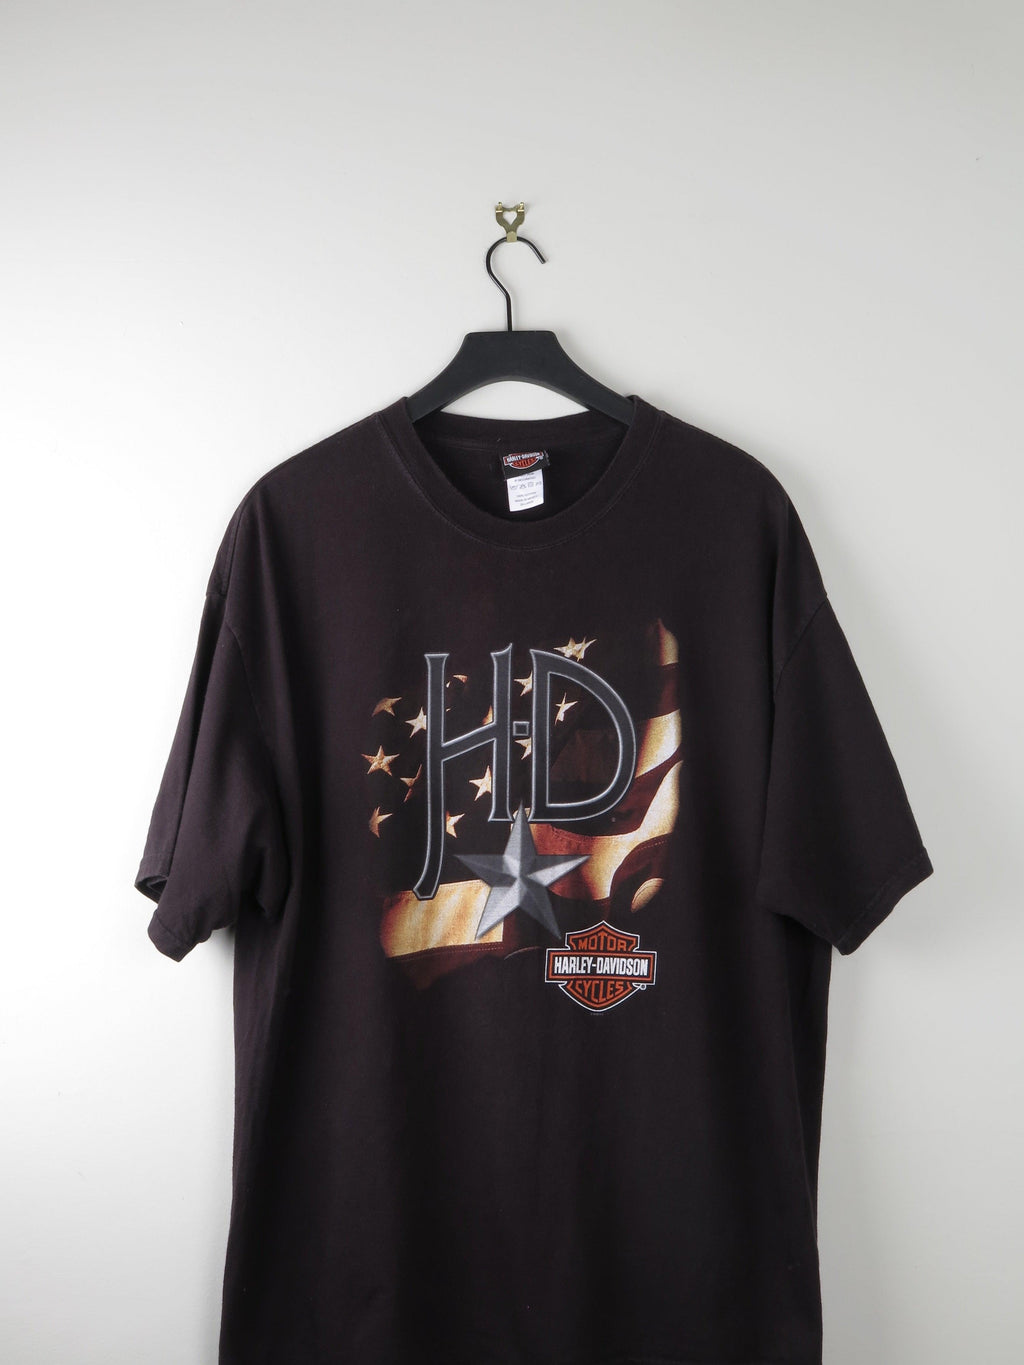 Harley Davidson T-shirt XL - The Harlequin